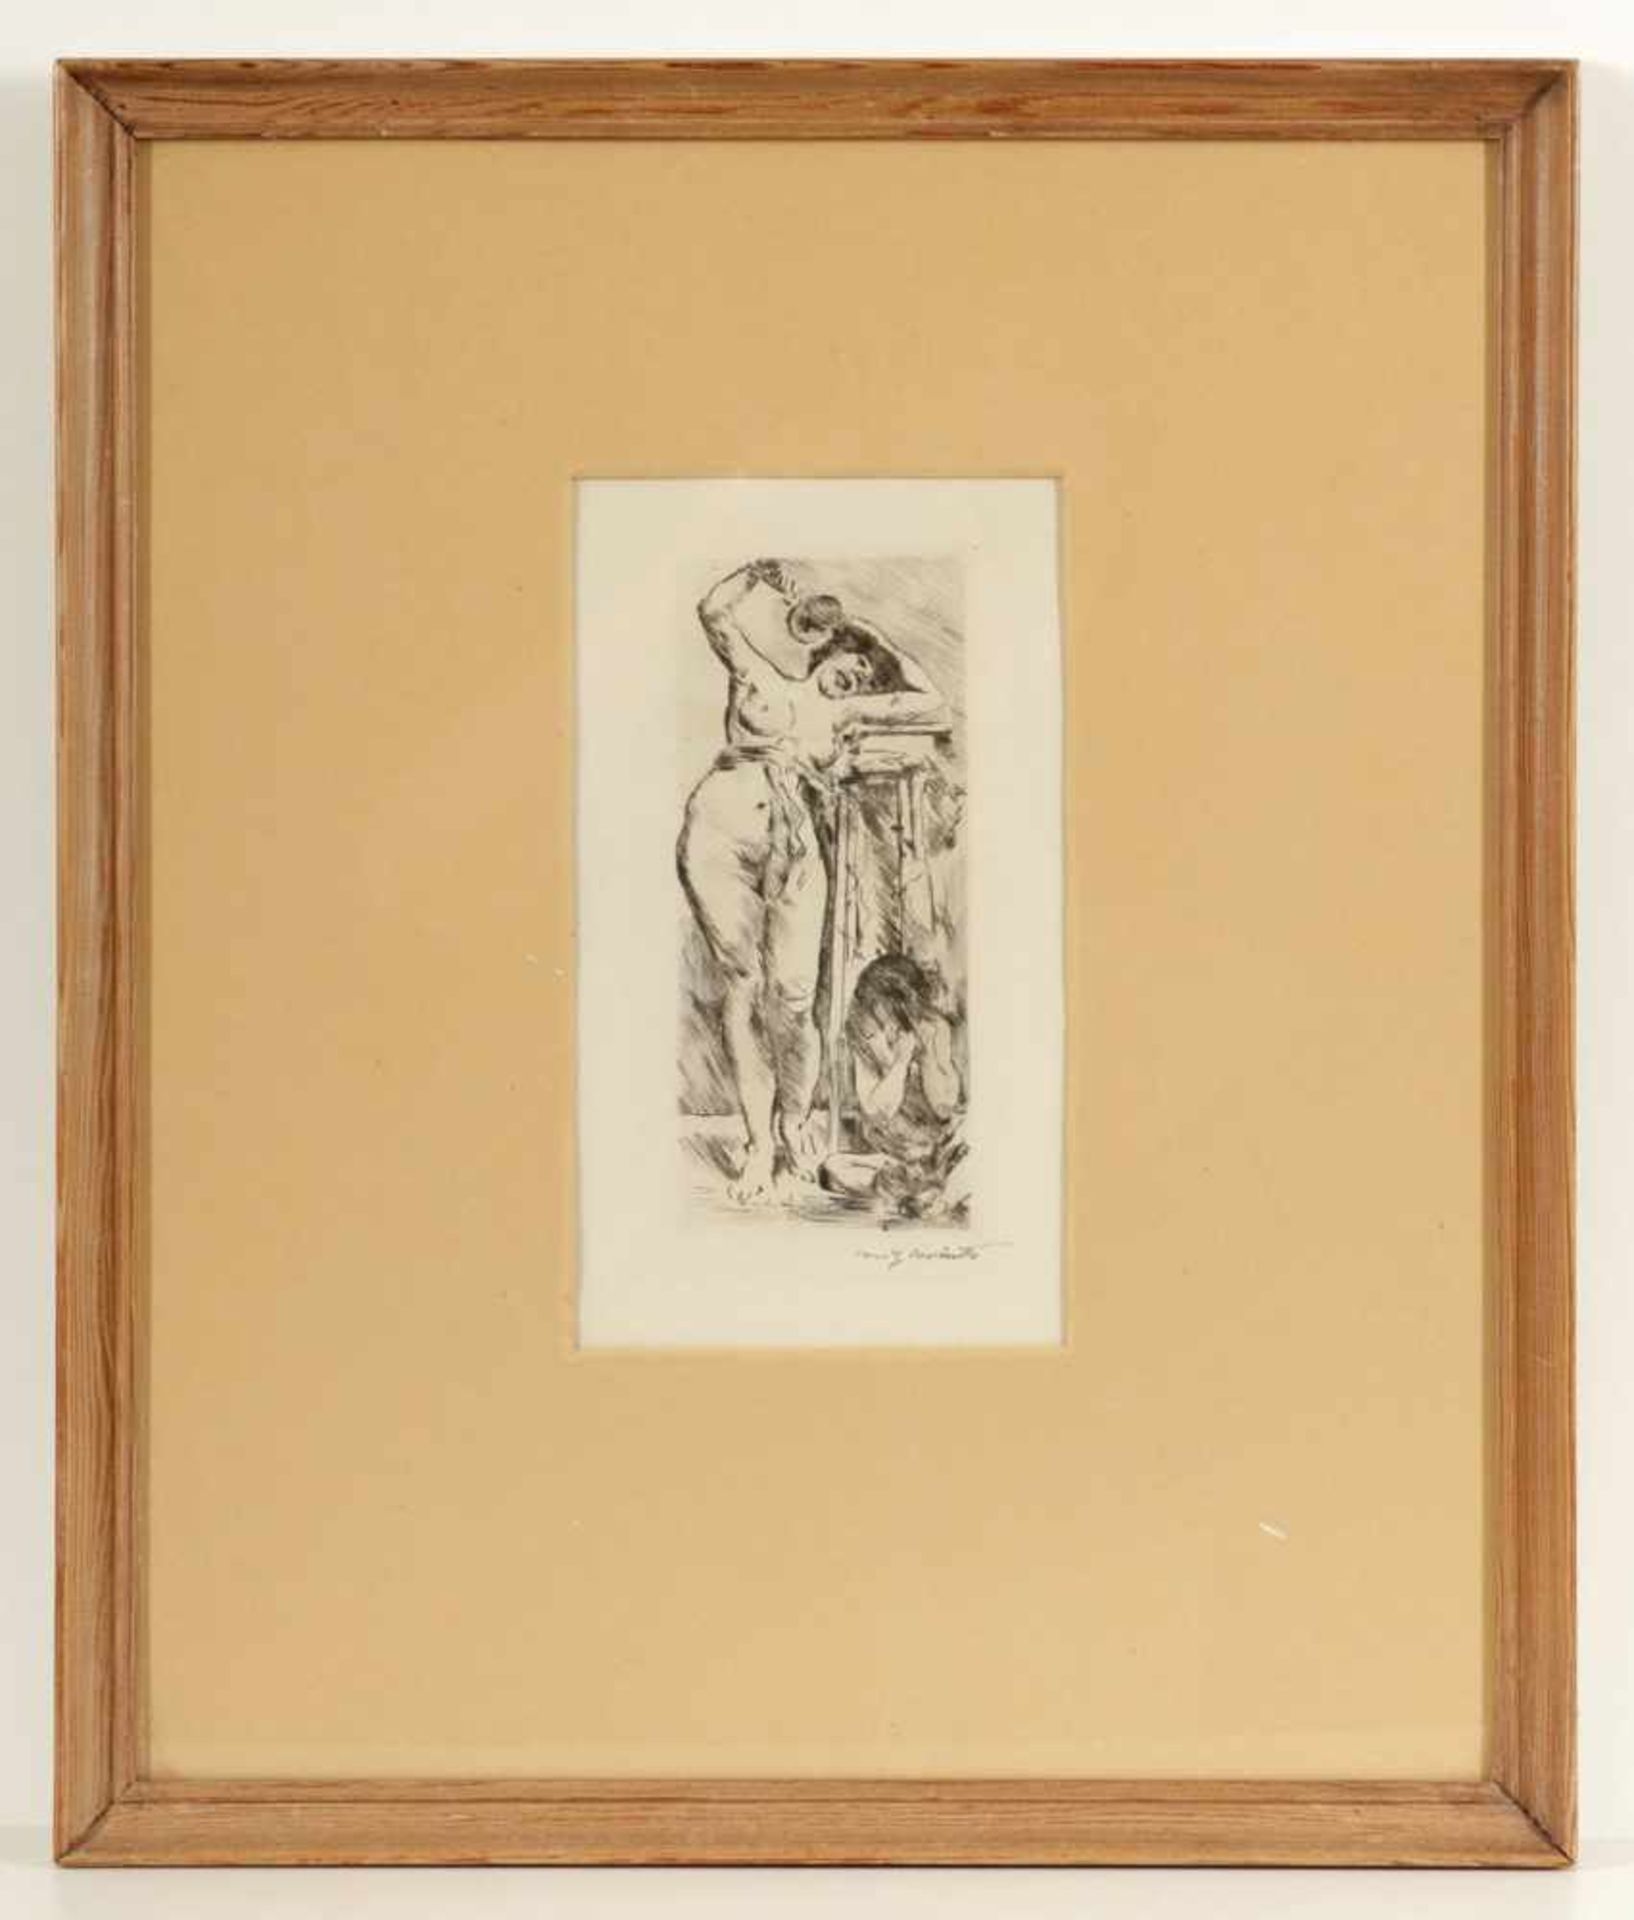 Lovis Corinth1858 Tapiau - 1925 Zandvoort - "Bacchantin" - Radierung/Papier. 21,8 x 10 cm, 27,3 x - Image 2 of 2